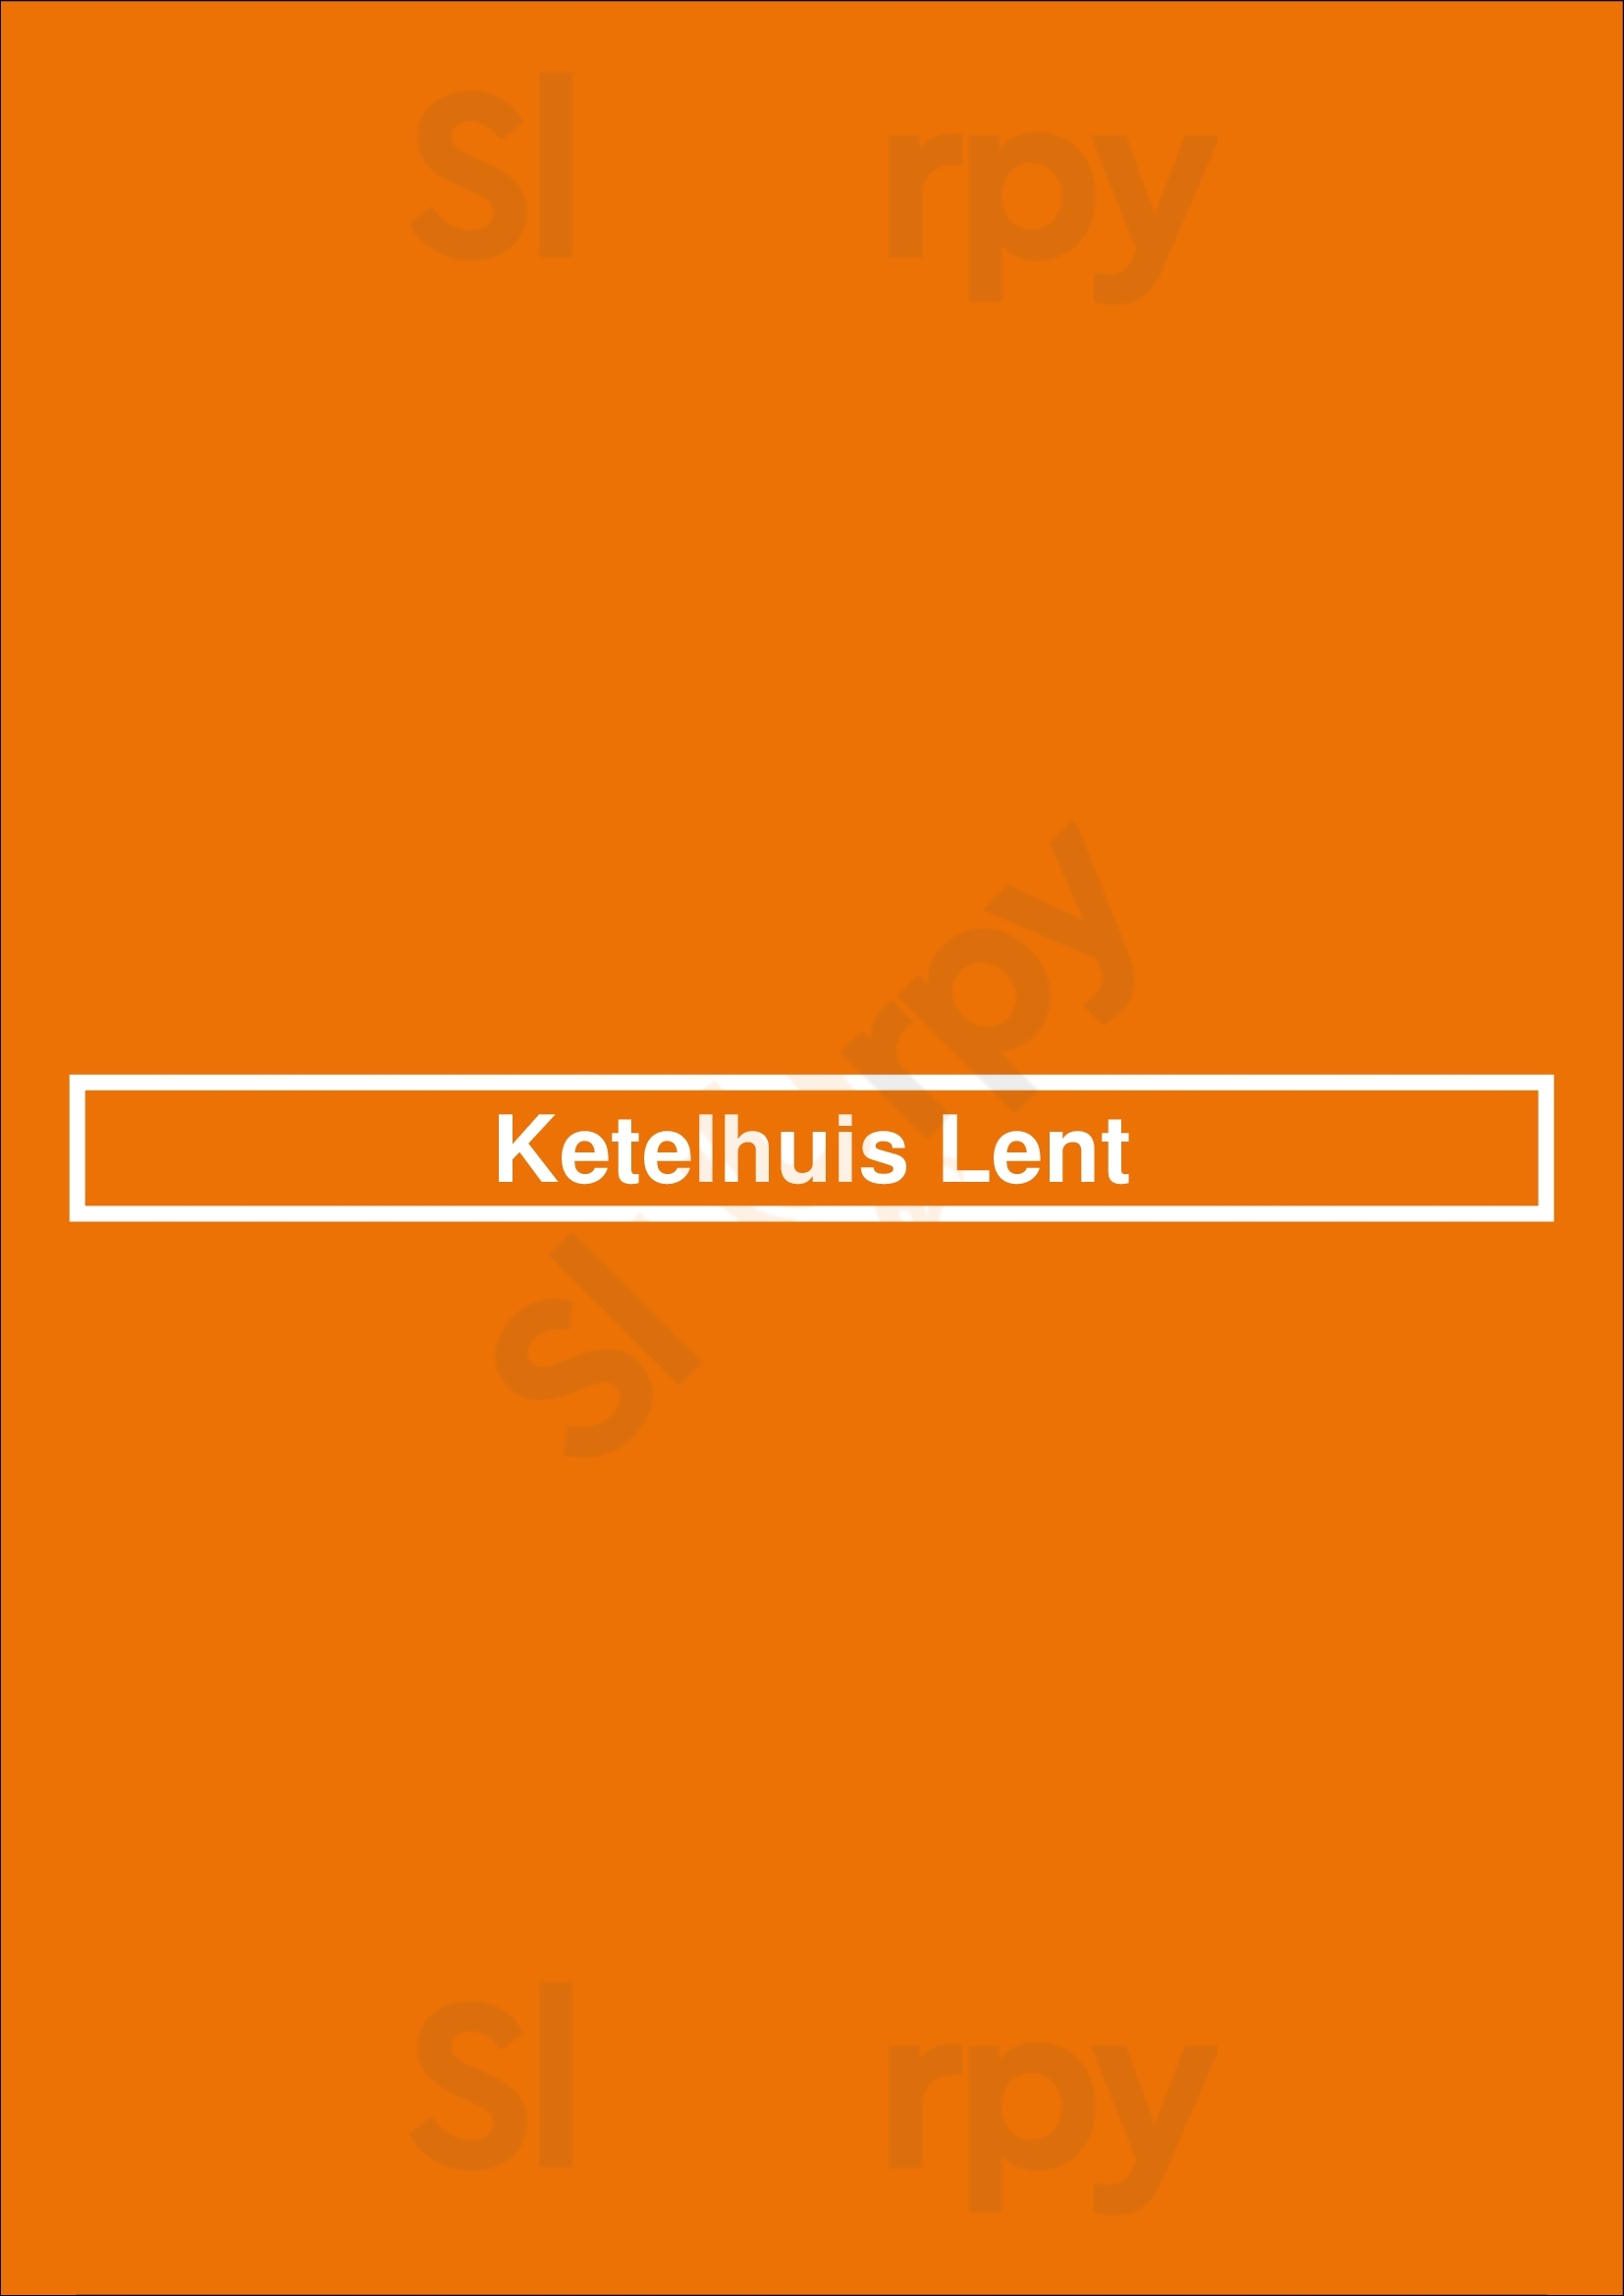 Ketelhuis Lent Nijmegen Menu - 1